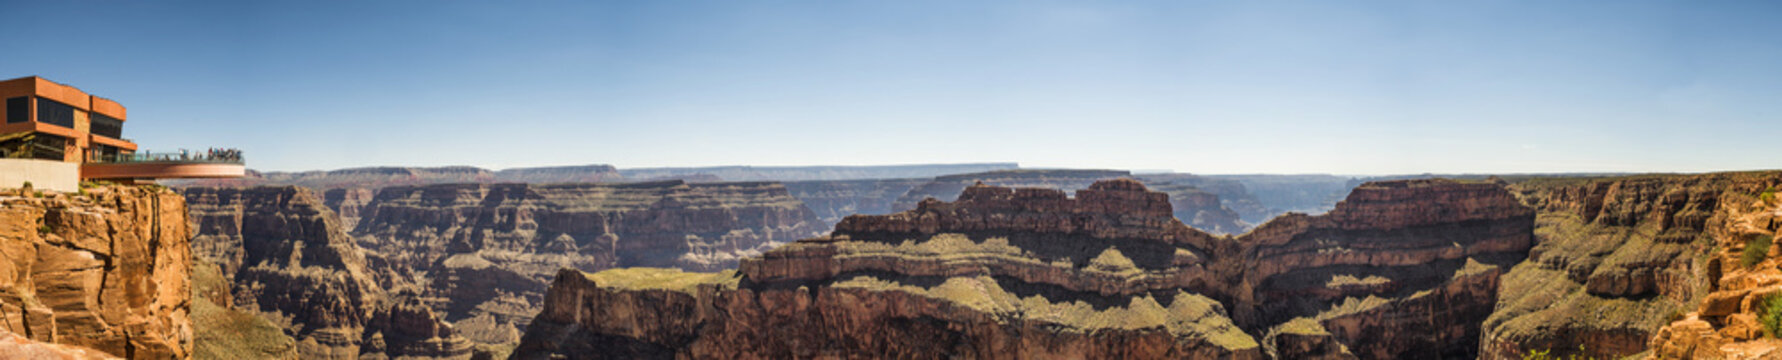 Panorama: Skywalk - Grand Canyon West Rim, Arizona, AZ, USA